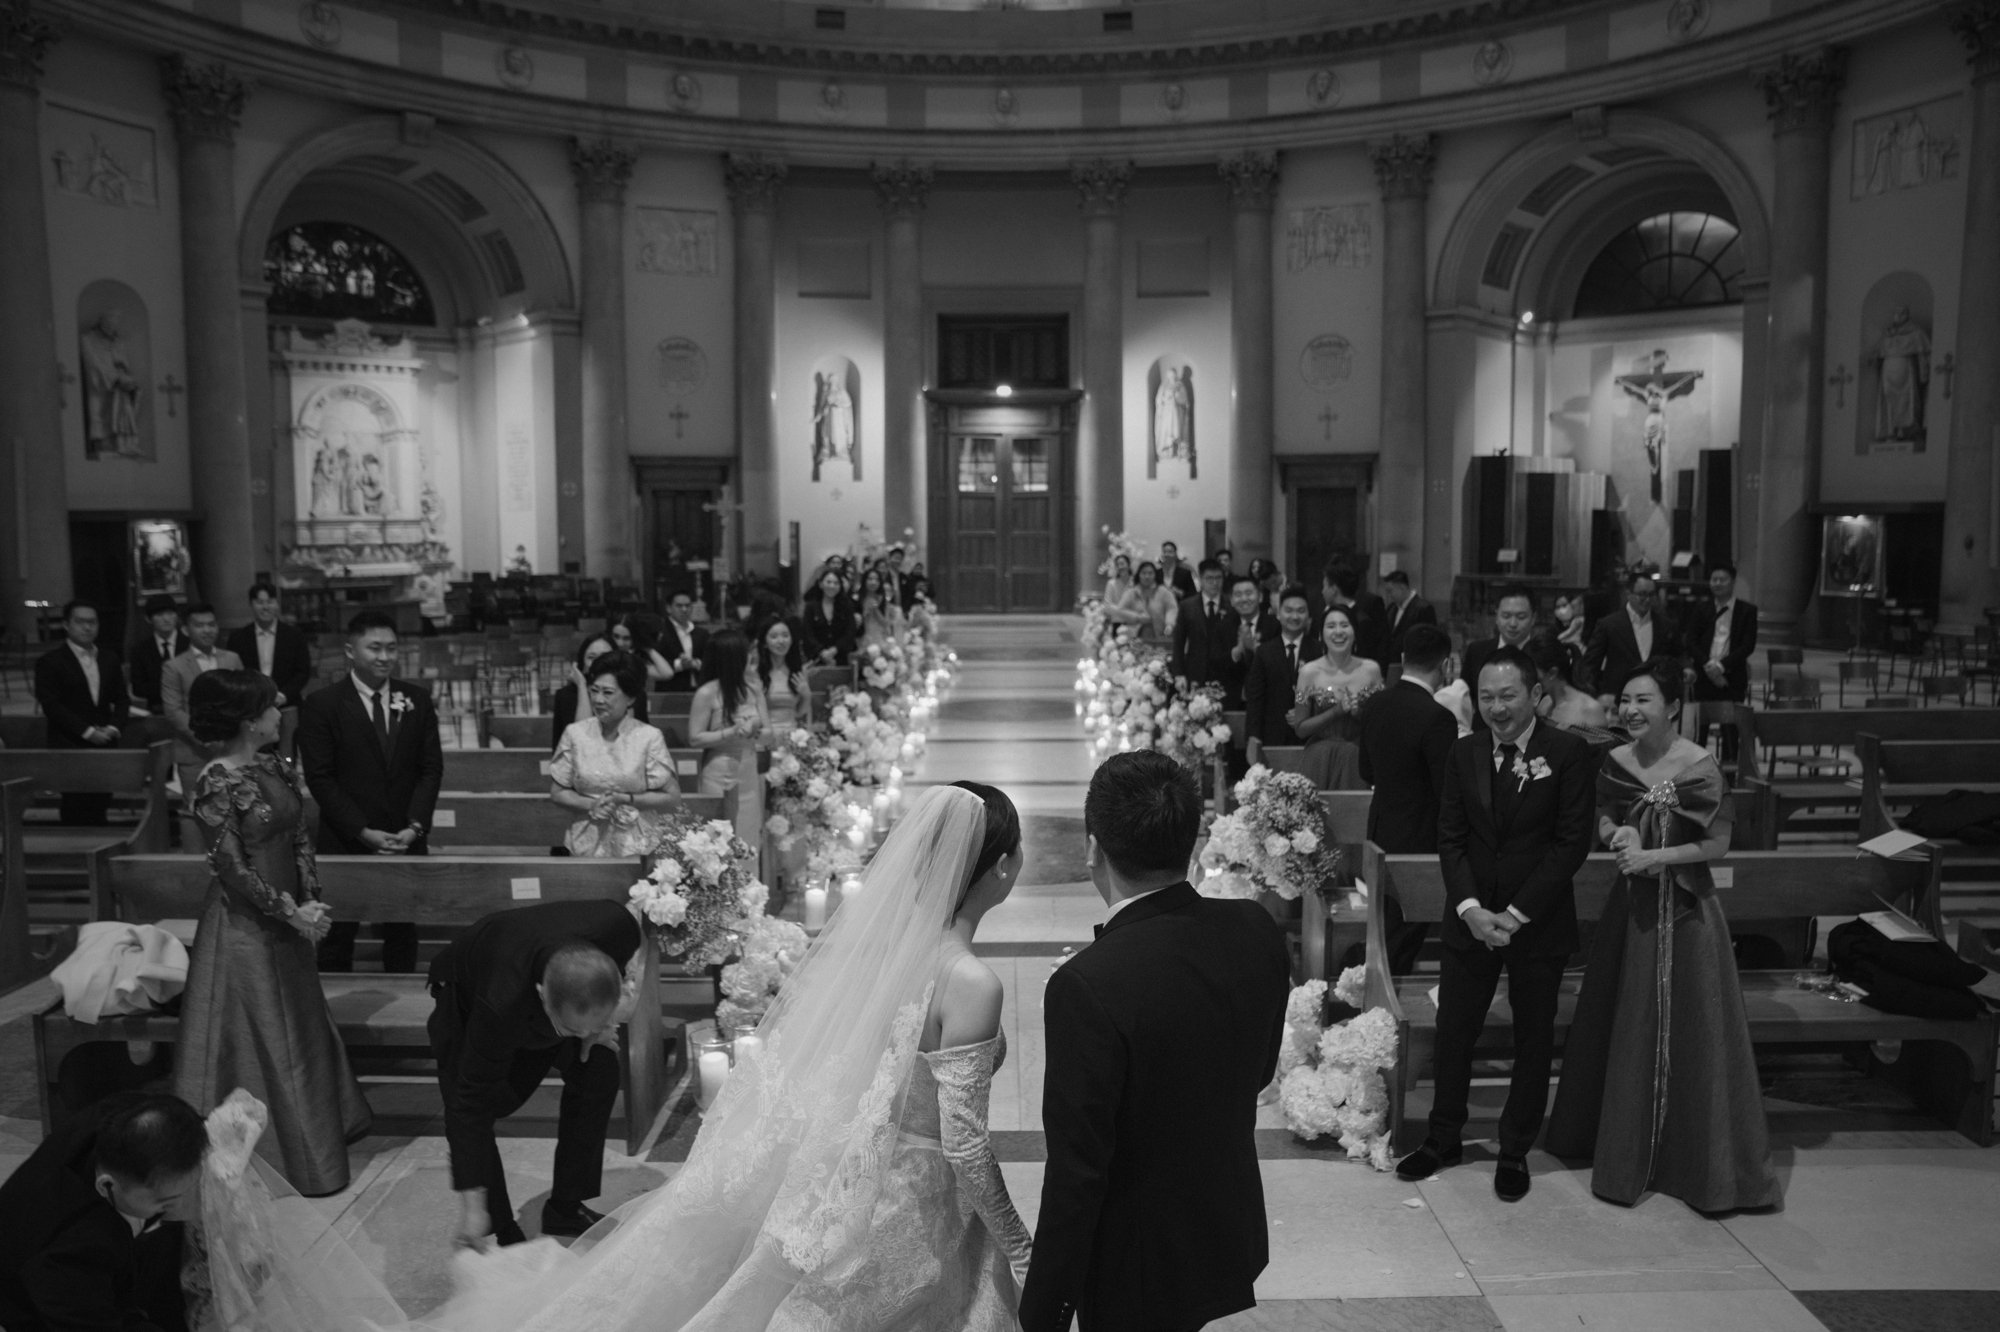 Prawira-Evelyn-Dolomites-Italy-Santre wedding-Yefta Gunawan-Jeriko MUA-Carol Kuntjoro Photography-61.jpg